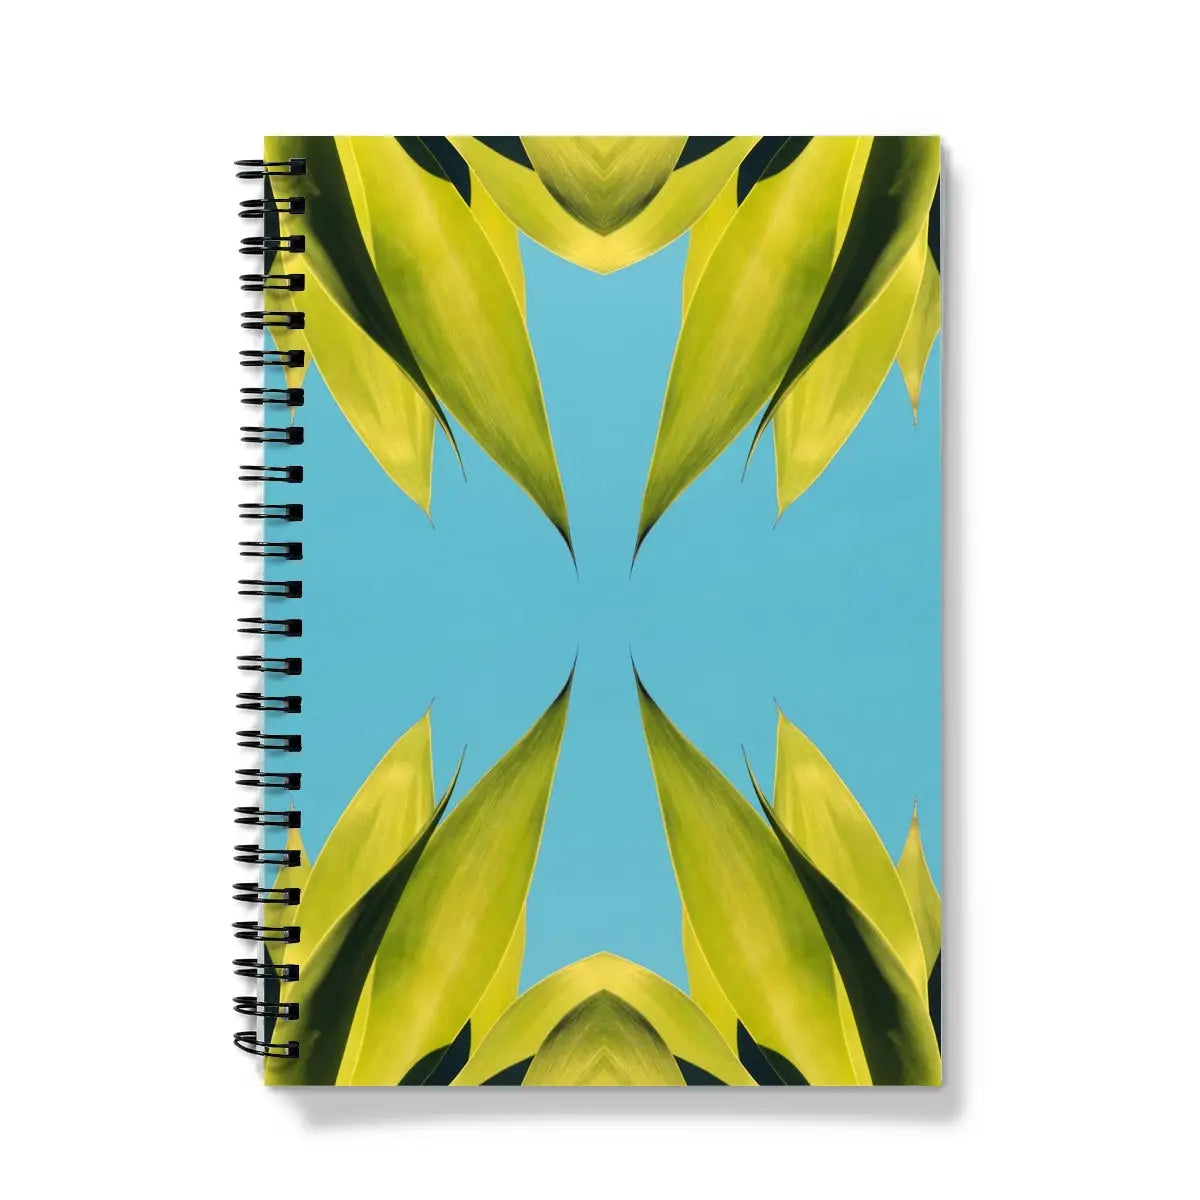 In Bloom - Trippy Modern Succulent Photography Art Notebook - A5 - Graph Paper - Notebooks & Notepads - Aesthetic Art